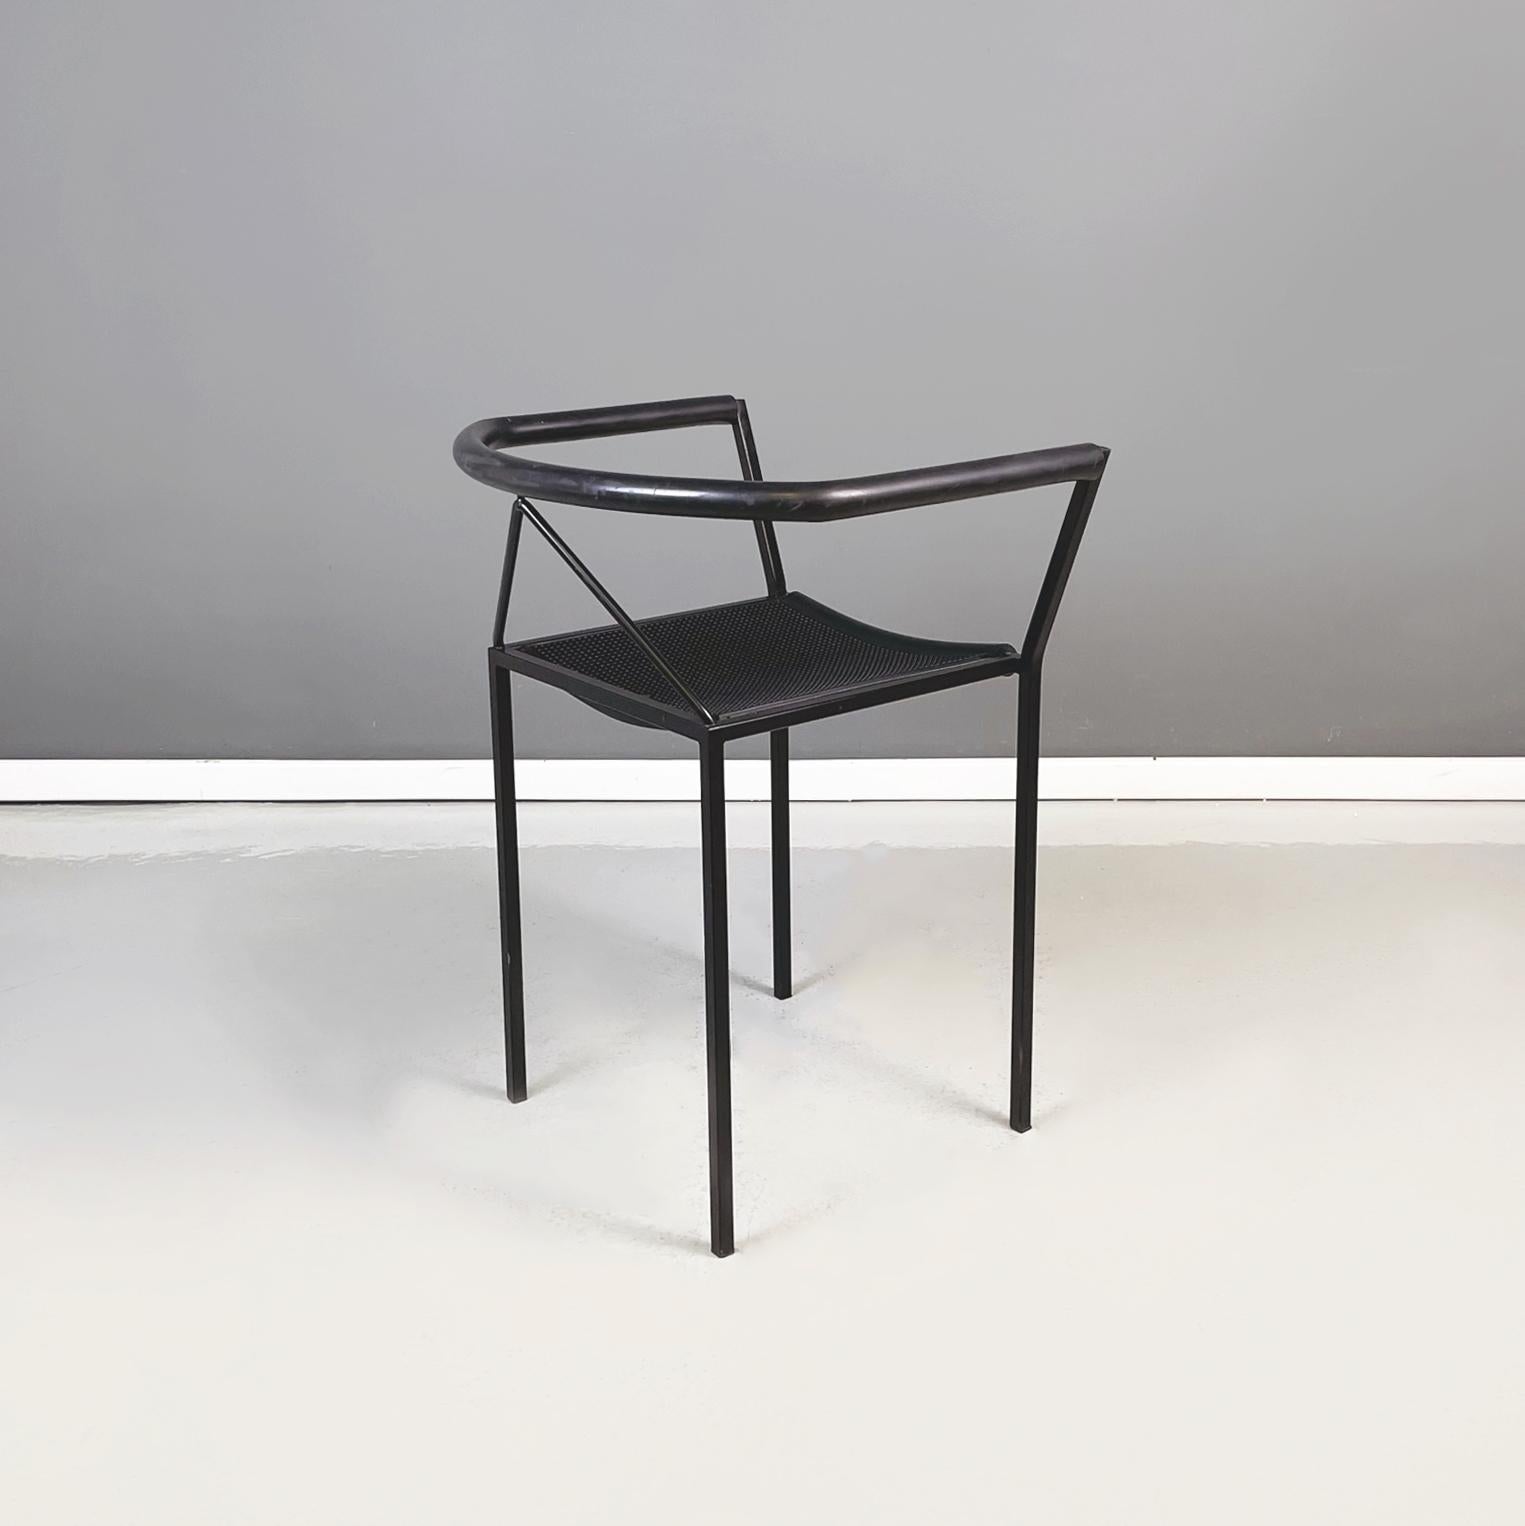 Late 20th Century Italian Modern Black Metal Chair Poltroncina by Maurizio Peregalli for Zeus 1990